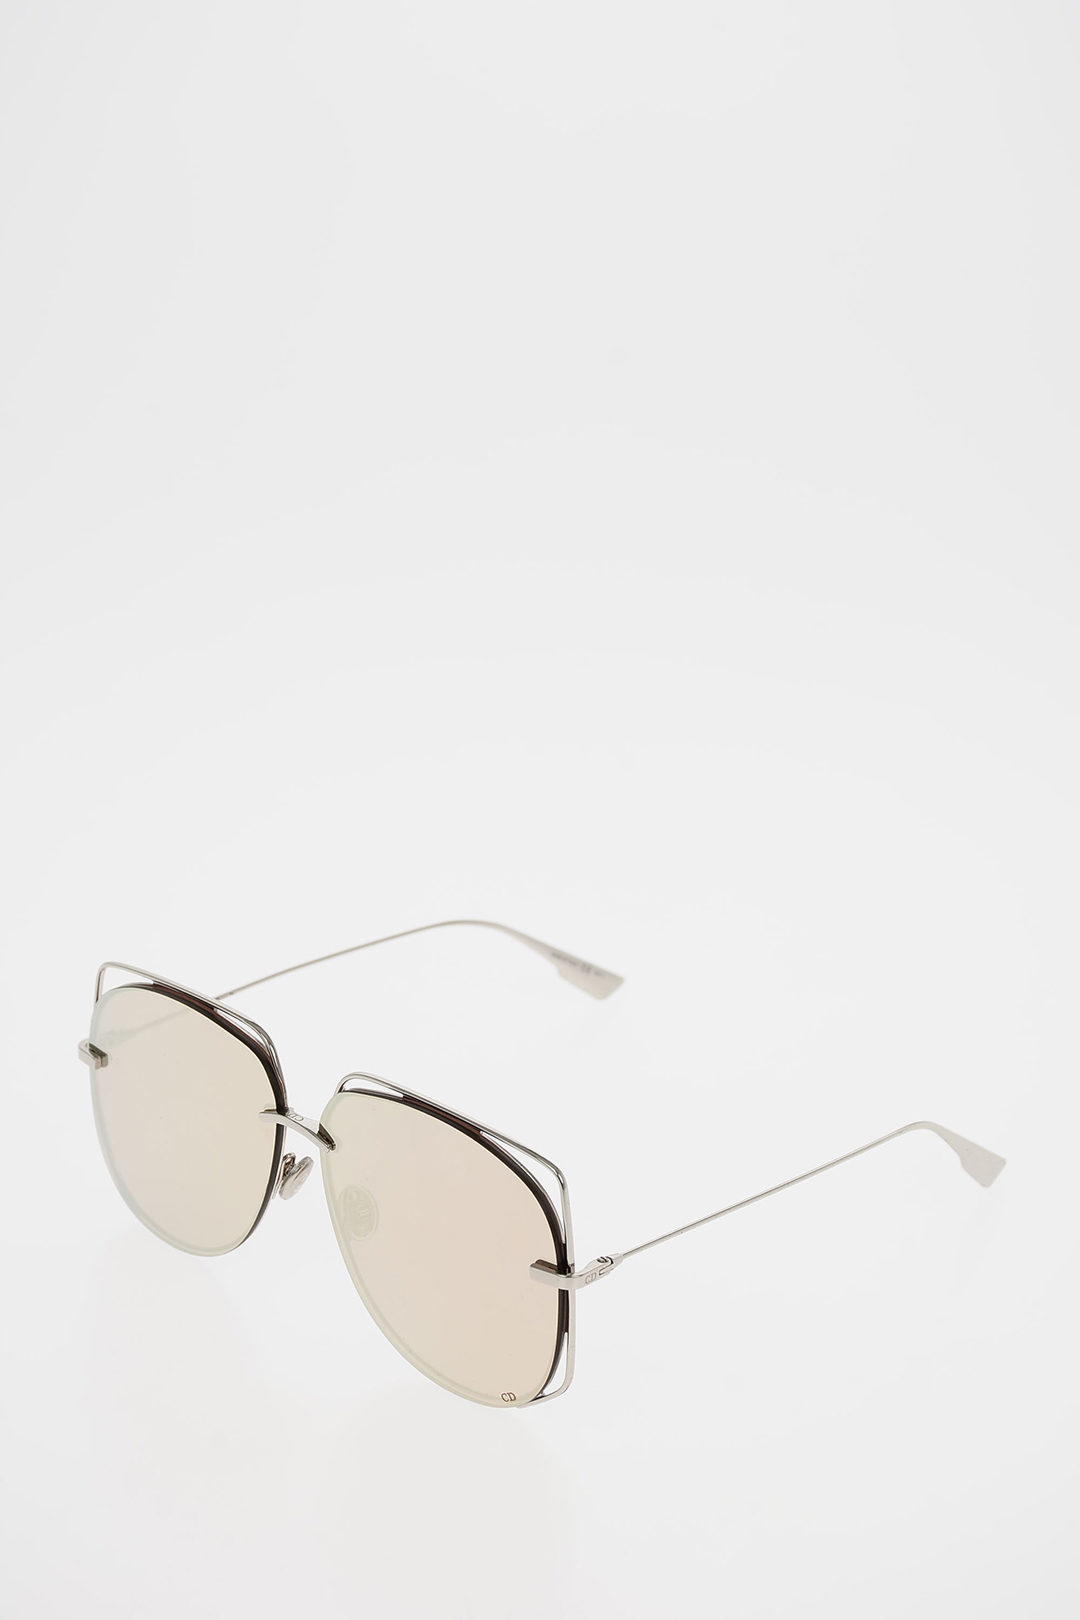 Christian Dior Sunglasses Sale  ShopStyle